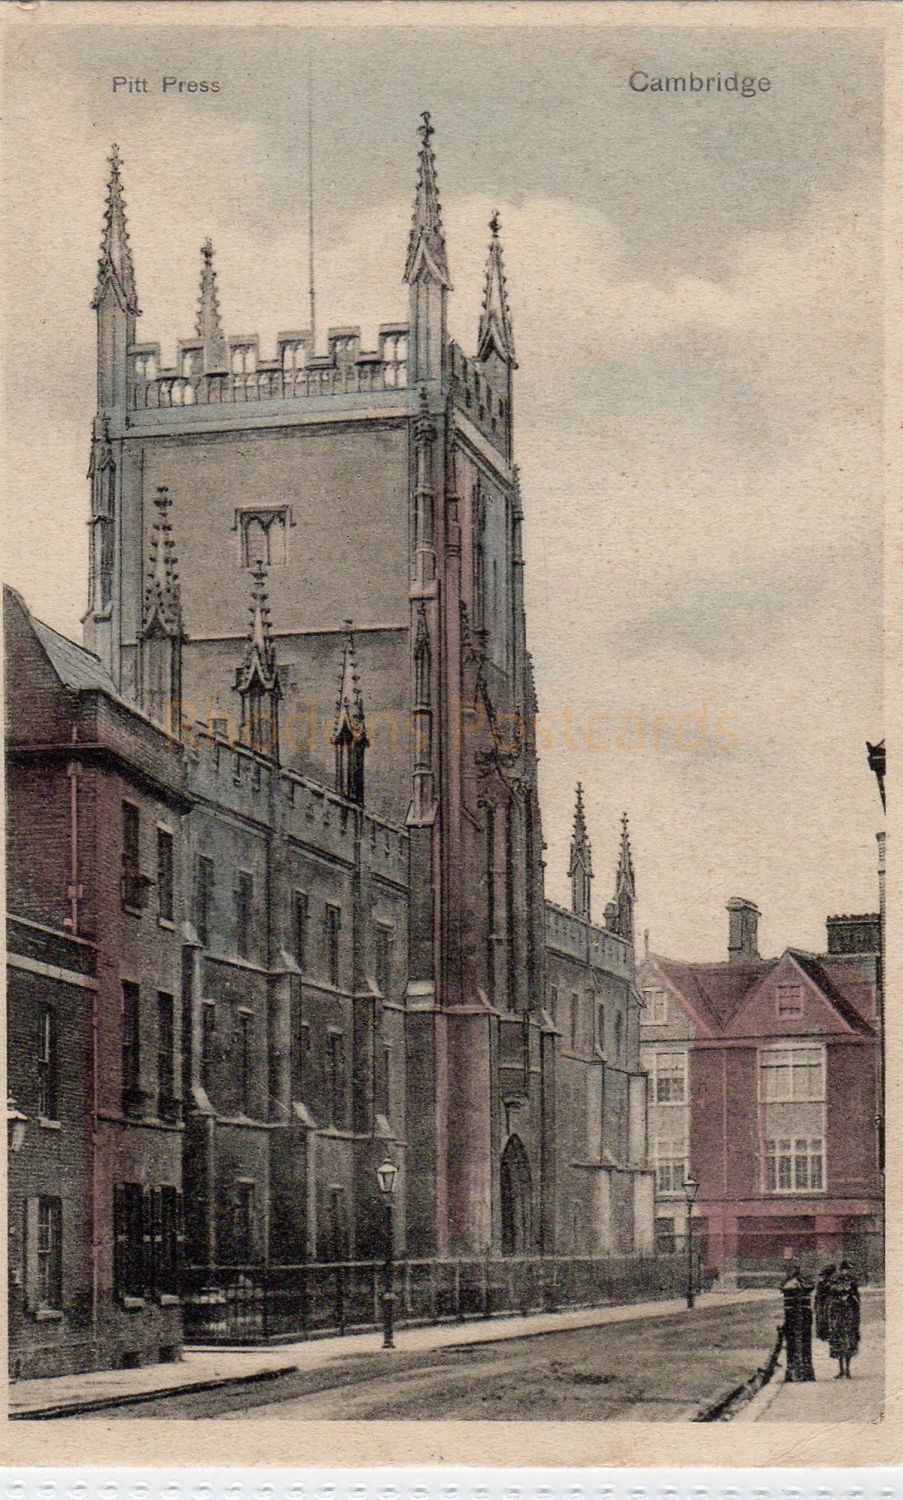 Pitt Press, Cambridge. Pre 1914 Postcard (299)